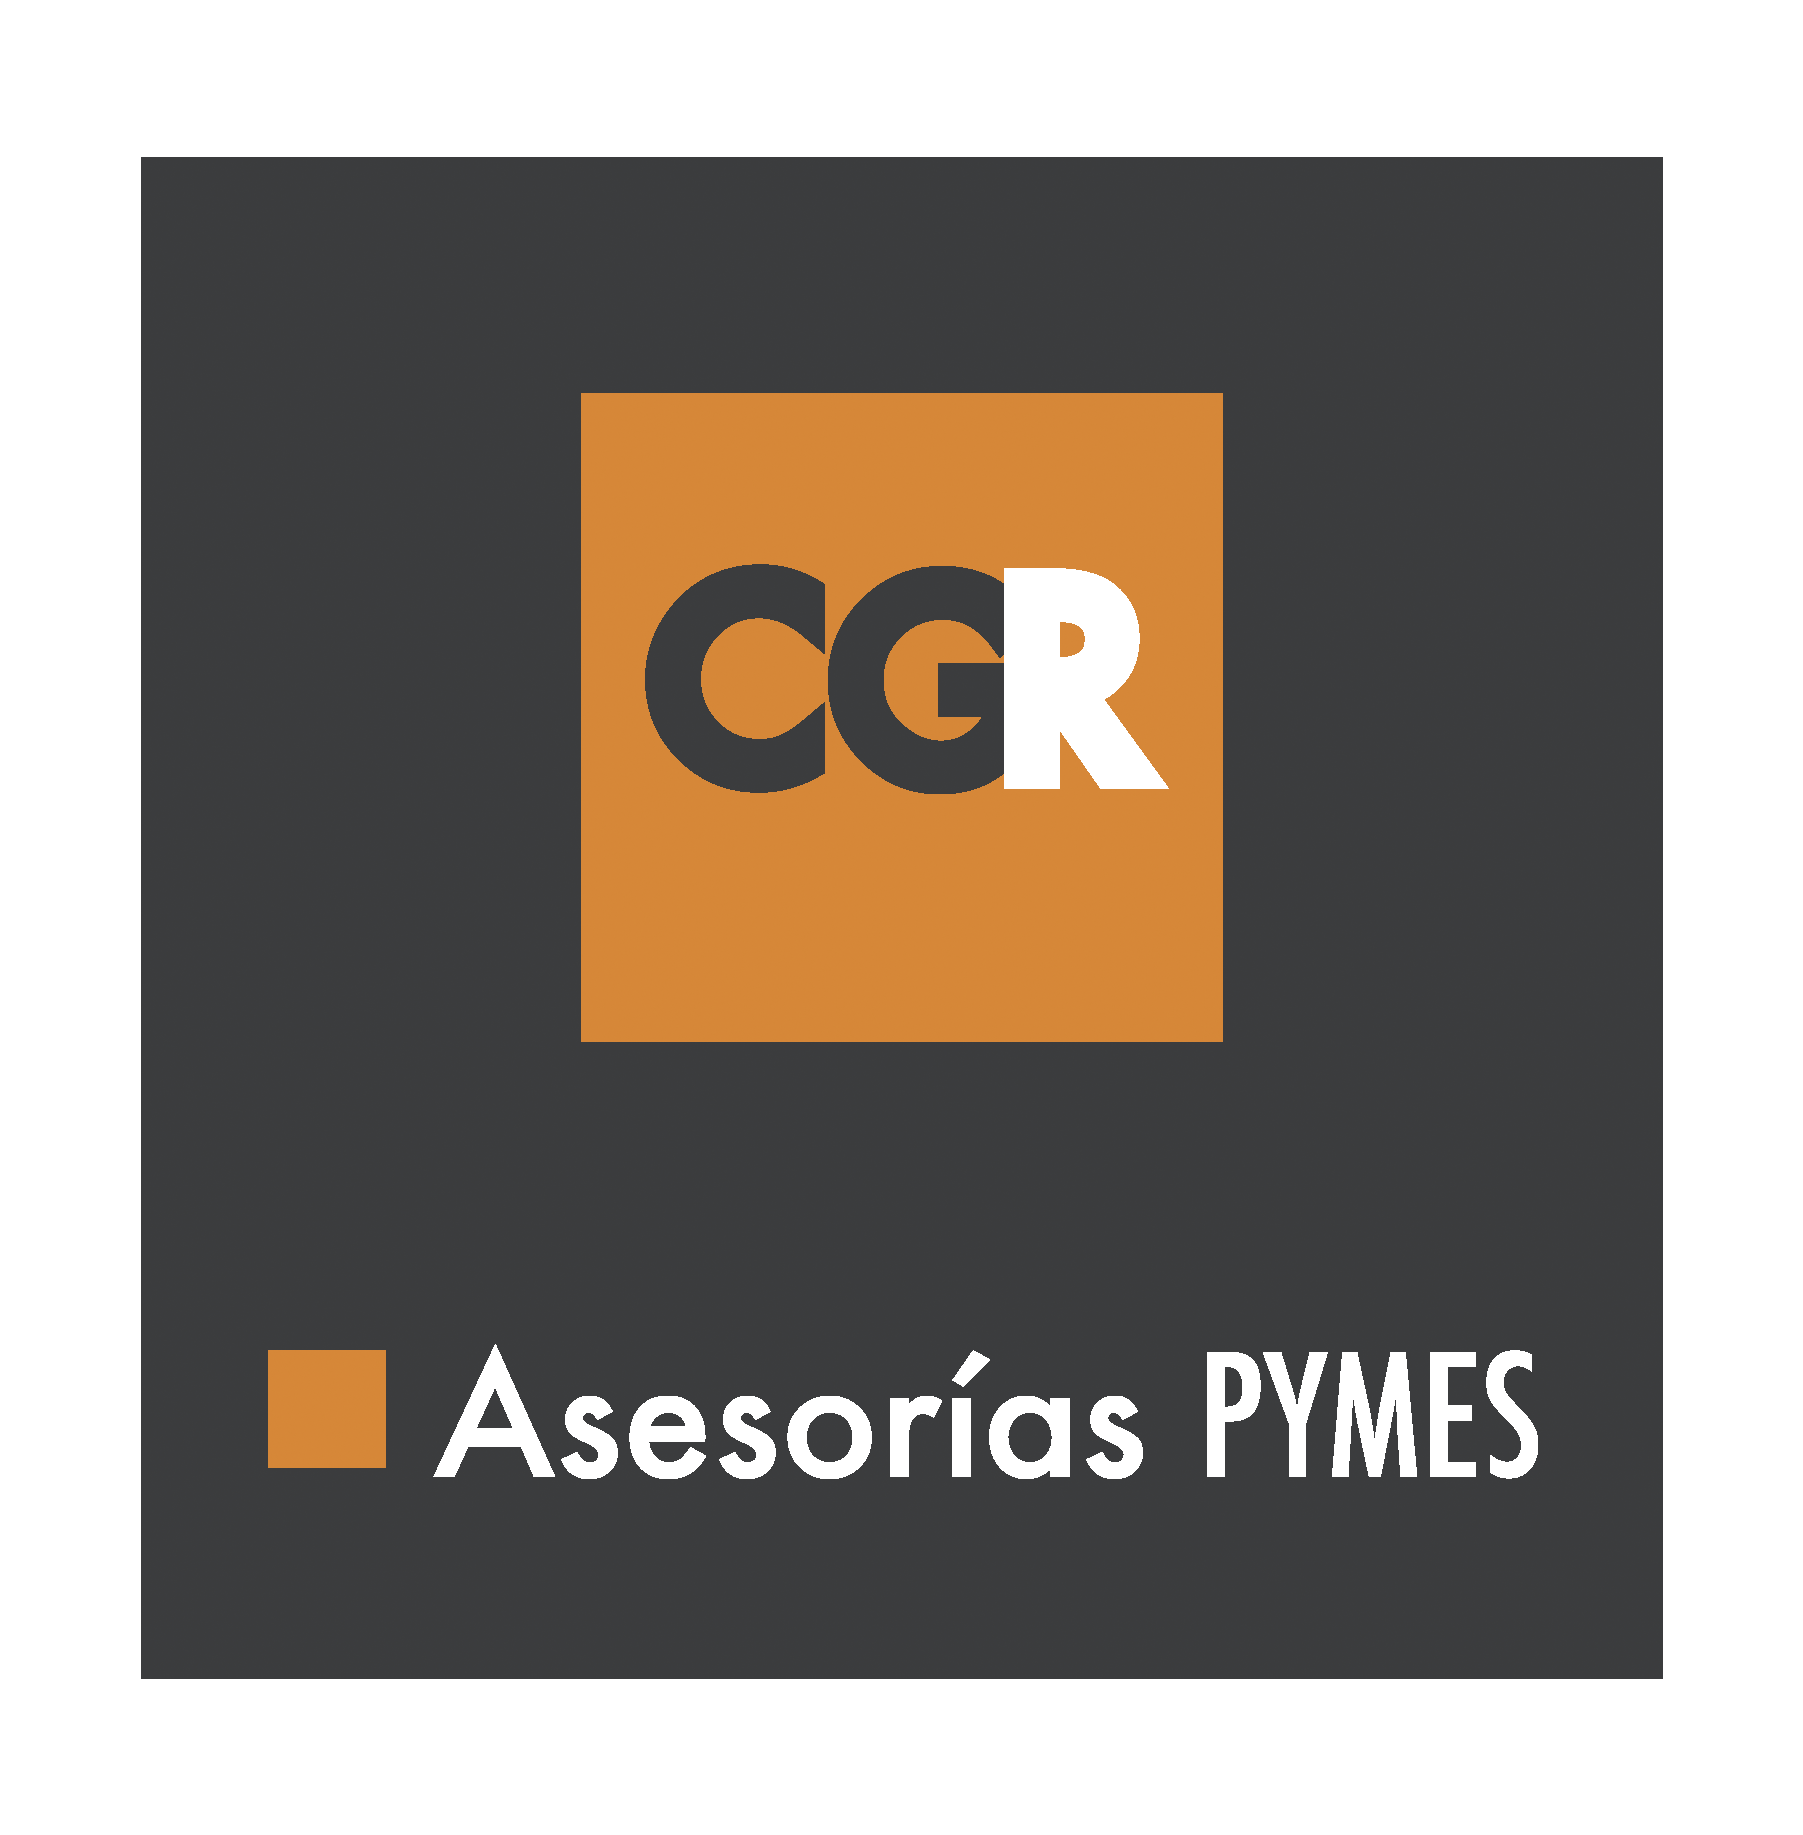 CGR Asesorias